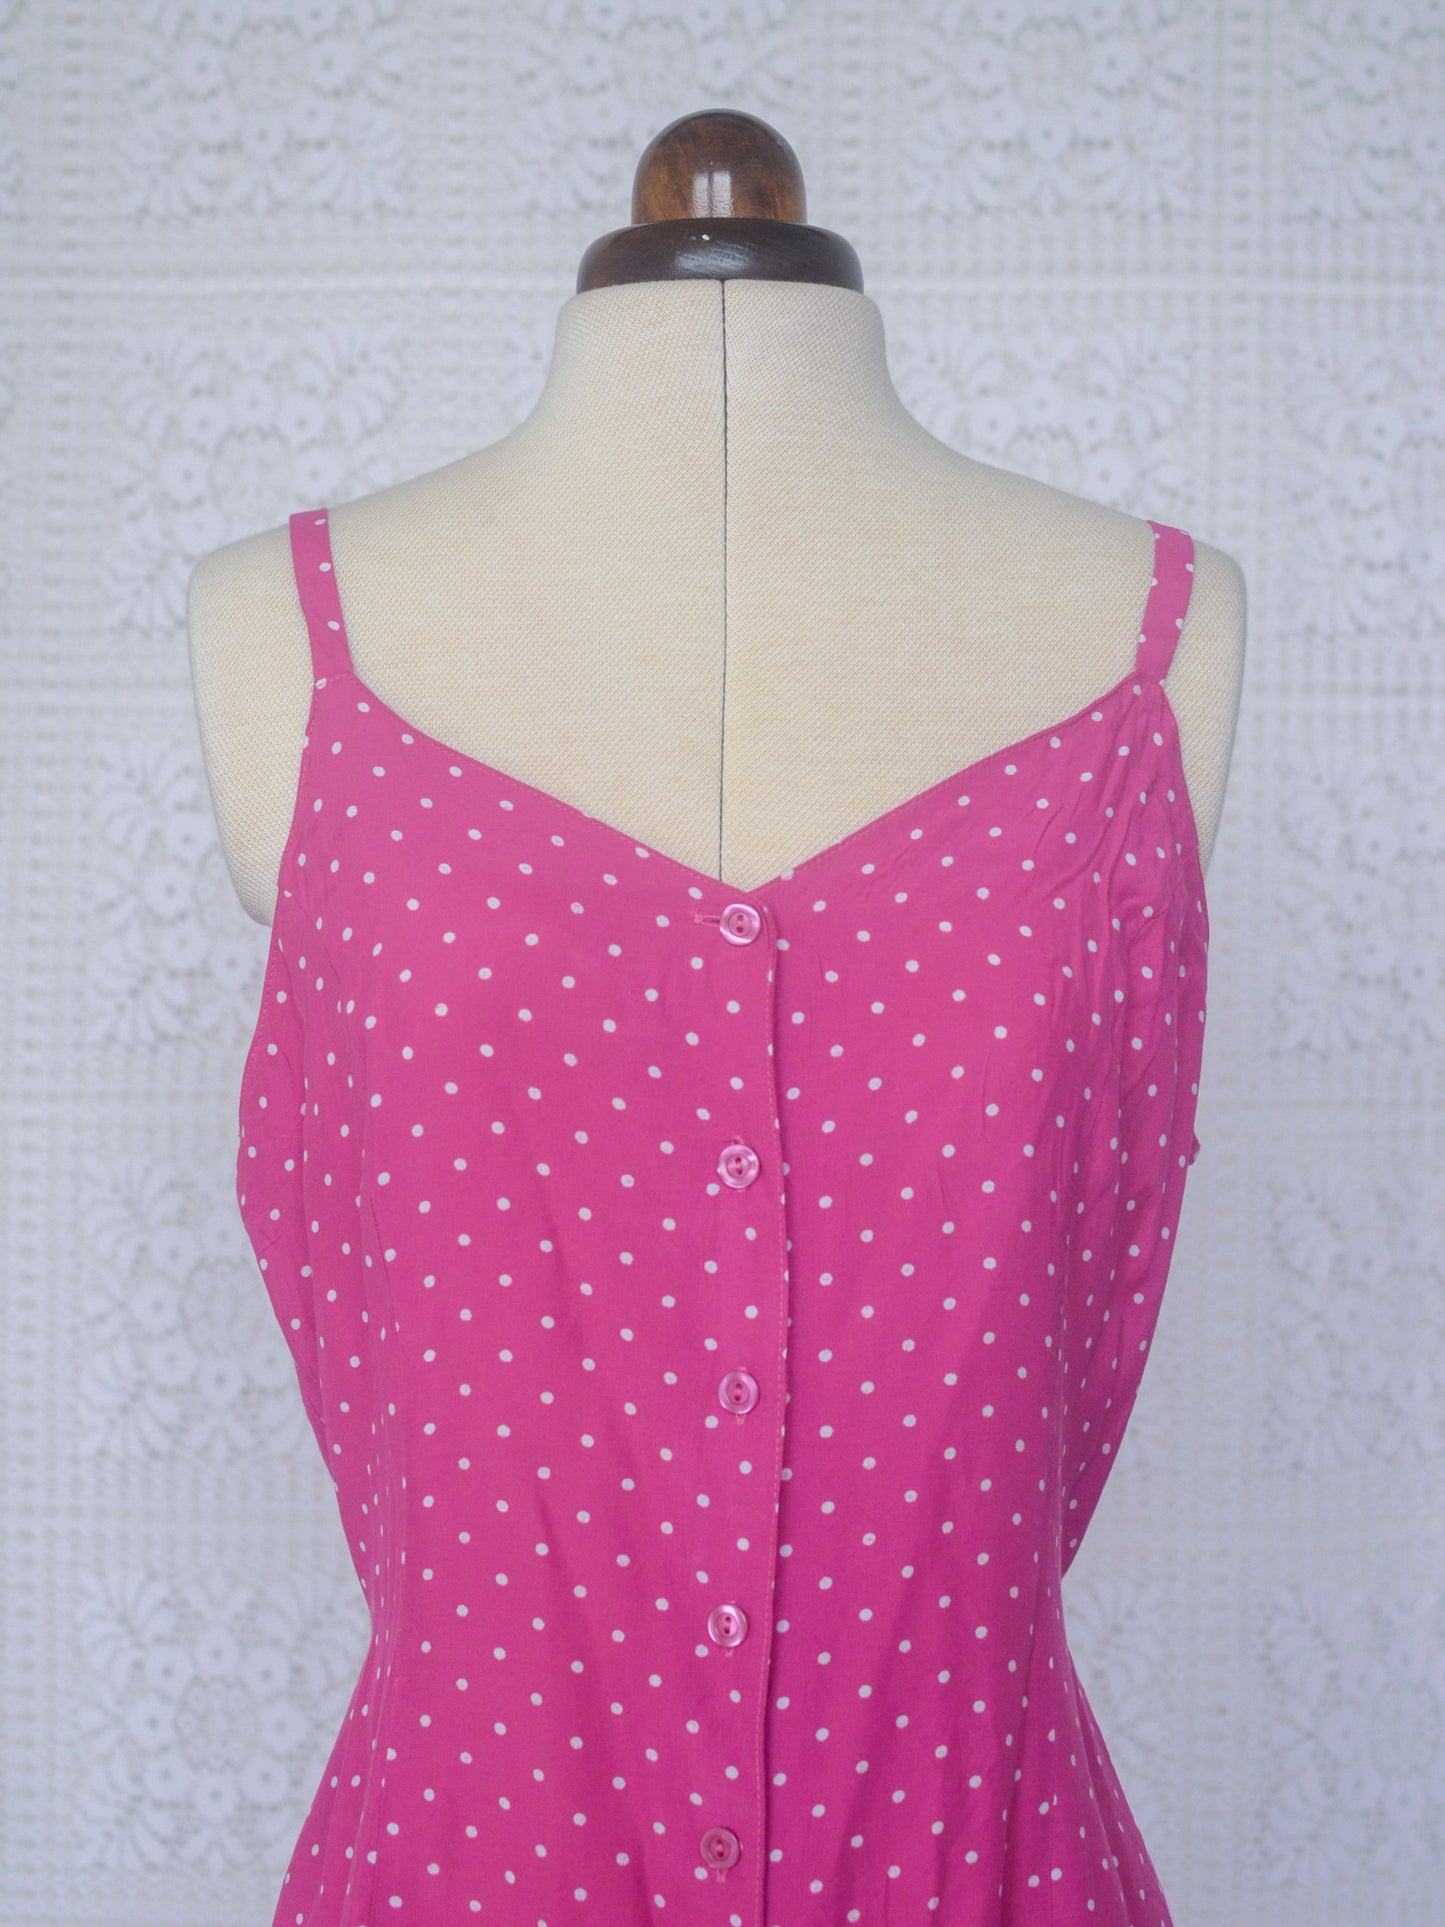 1990s pink and white strappy polkadot midi dress